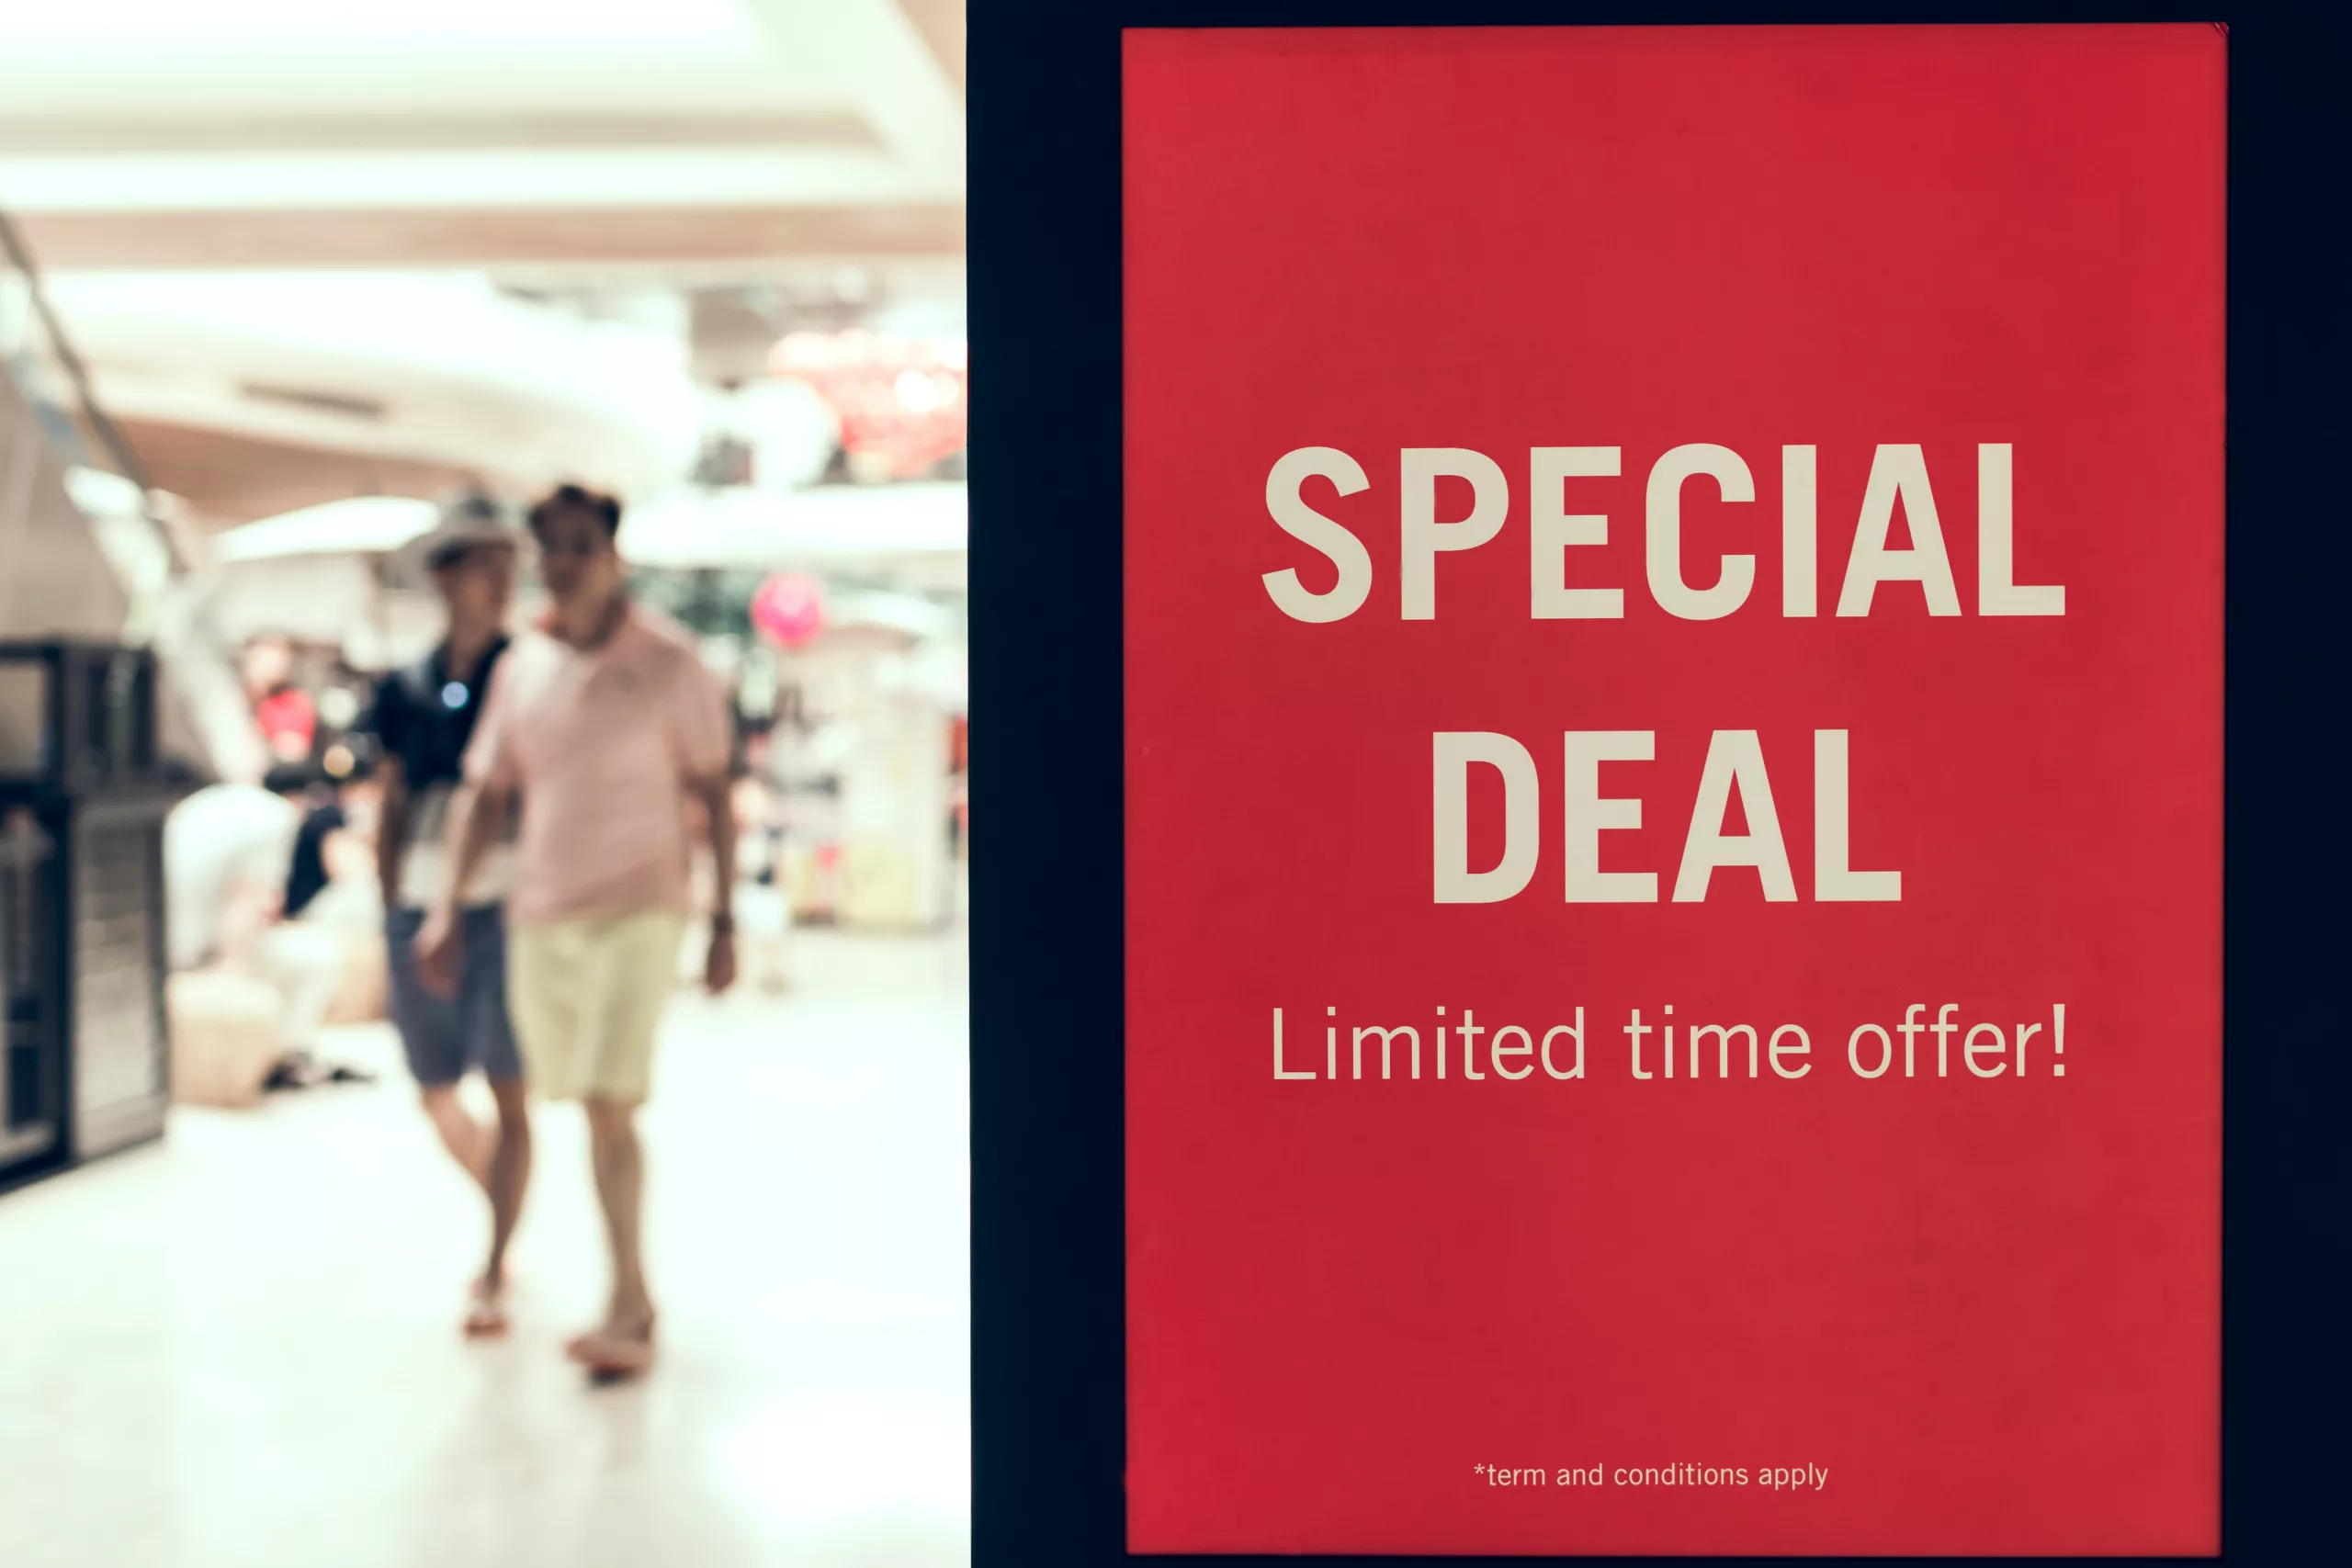 Special offer sales signage